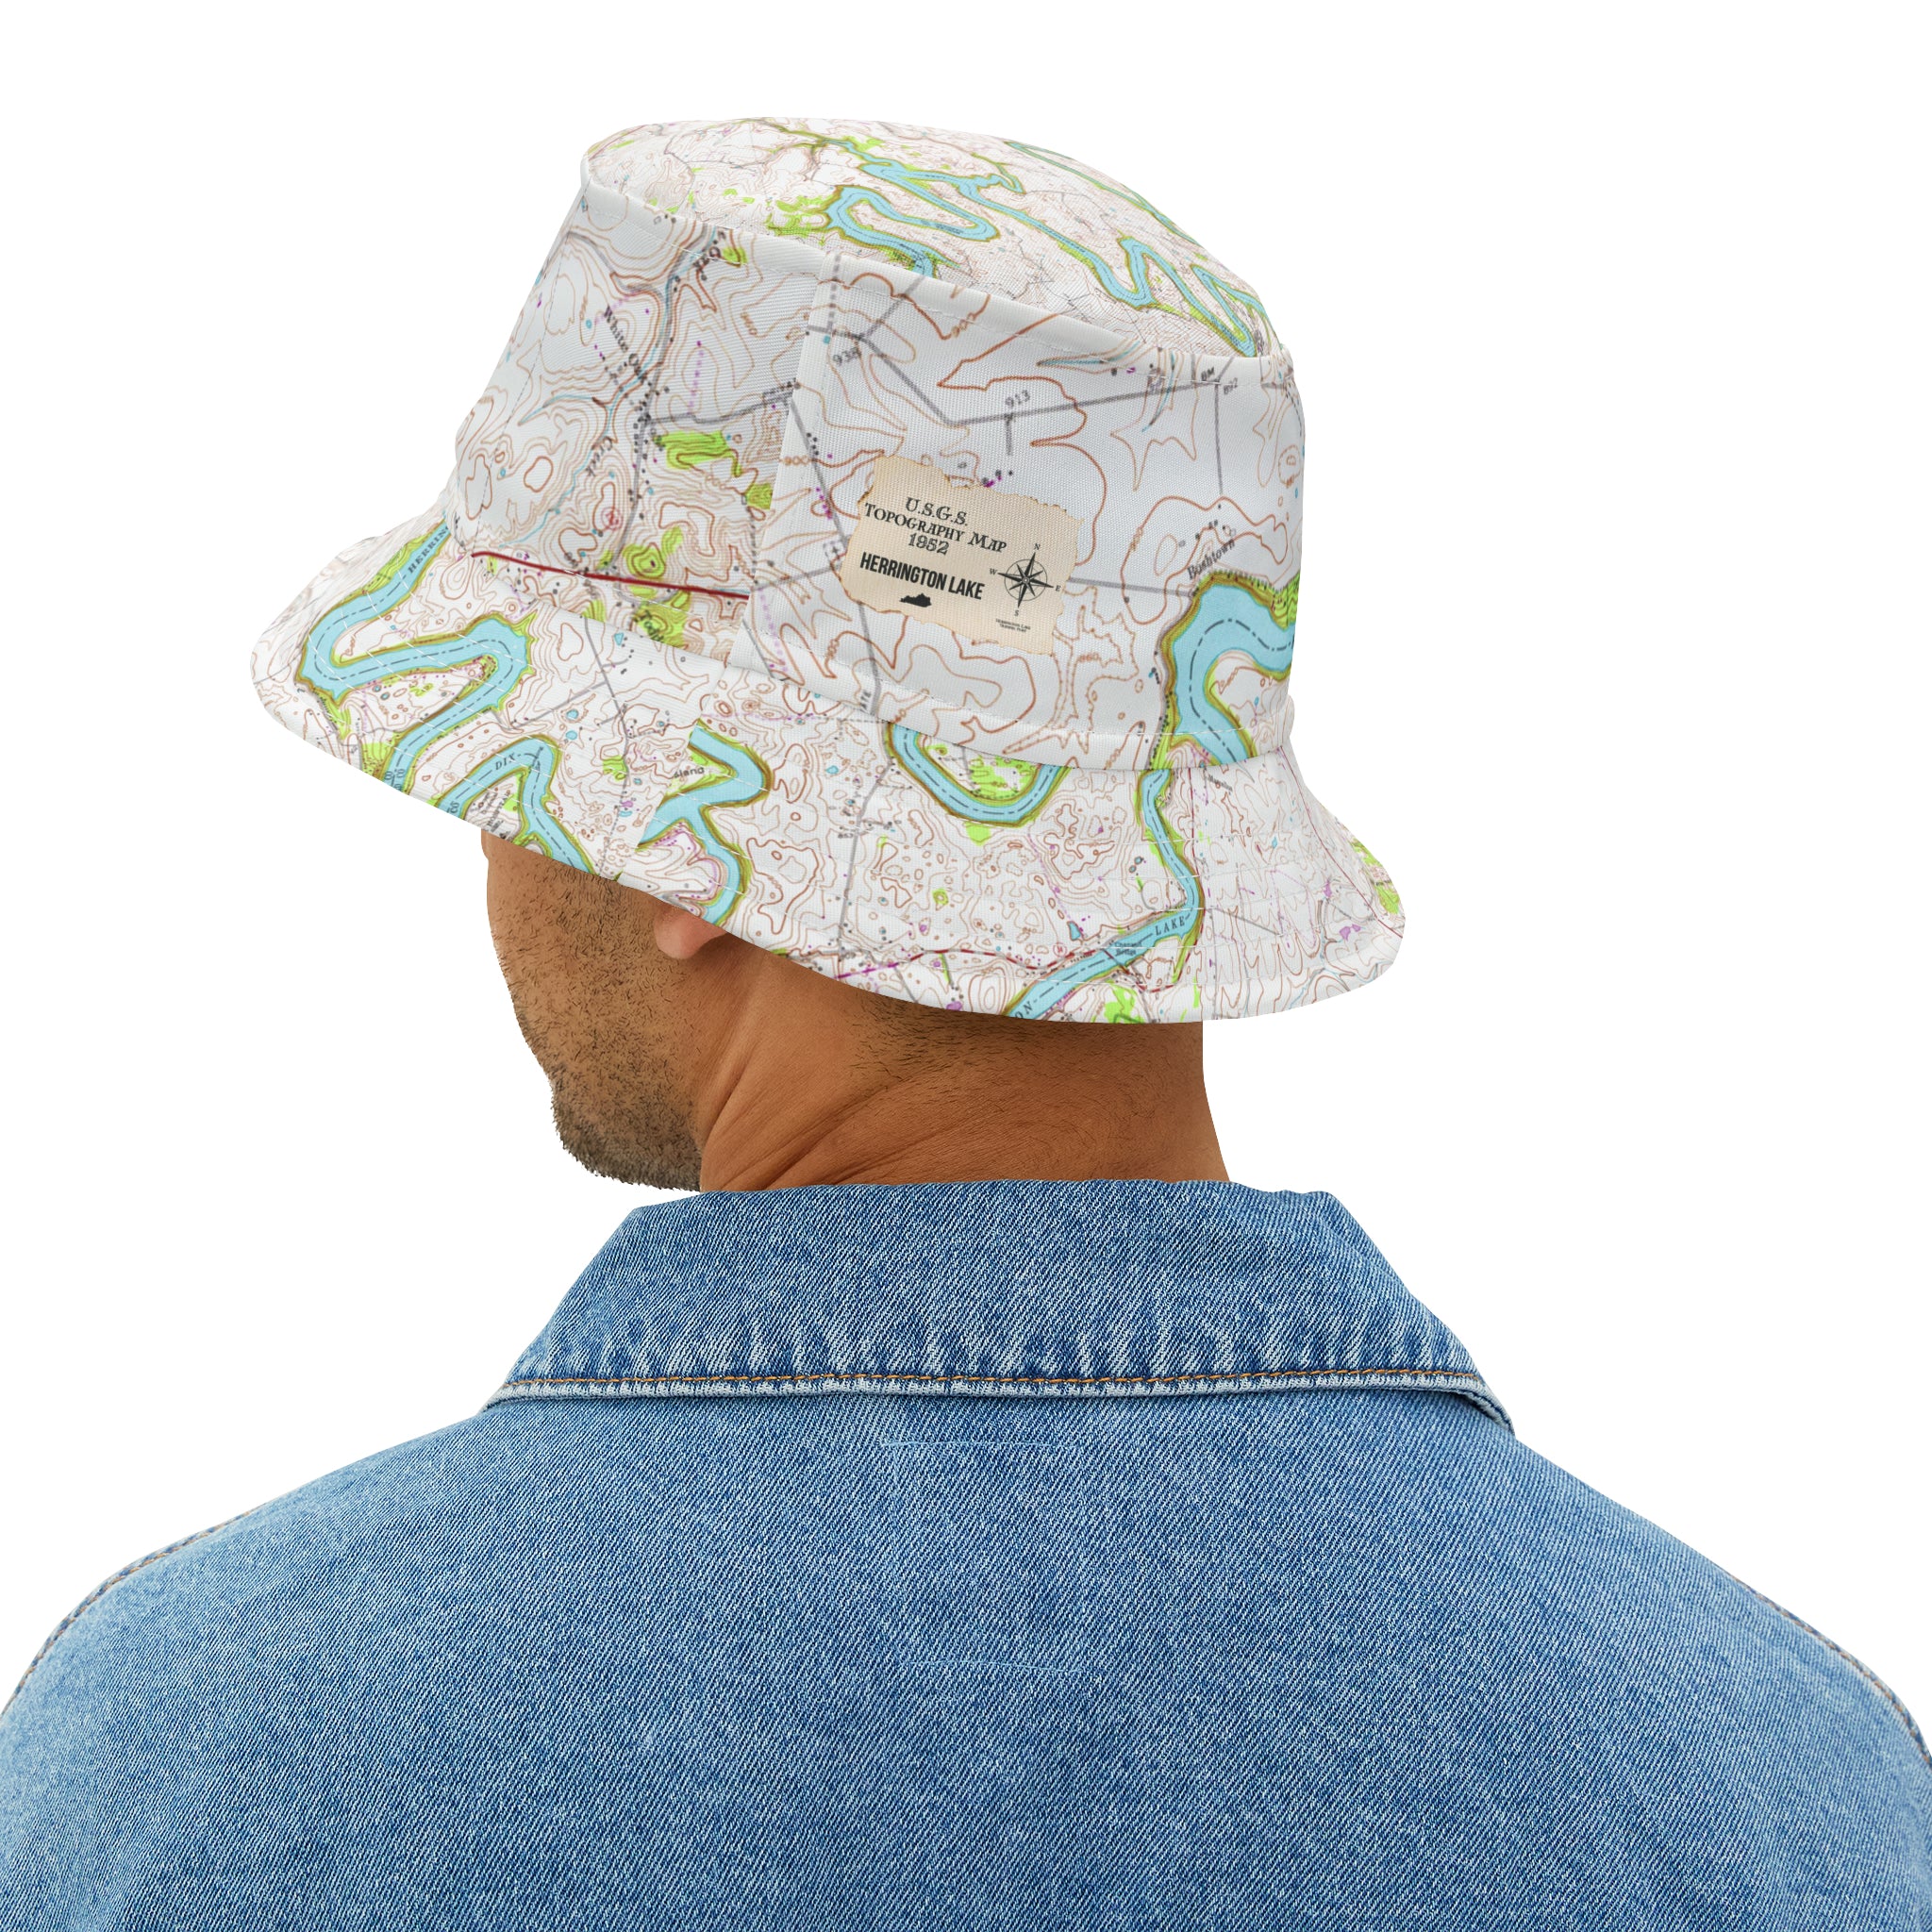 Herrington Lake Topography Map Bucket Hat, Natural Colors